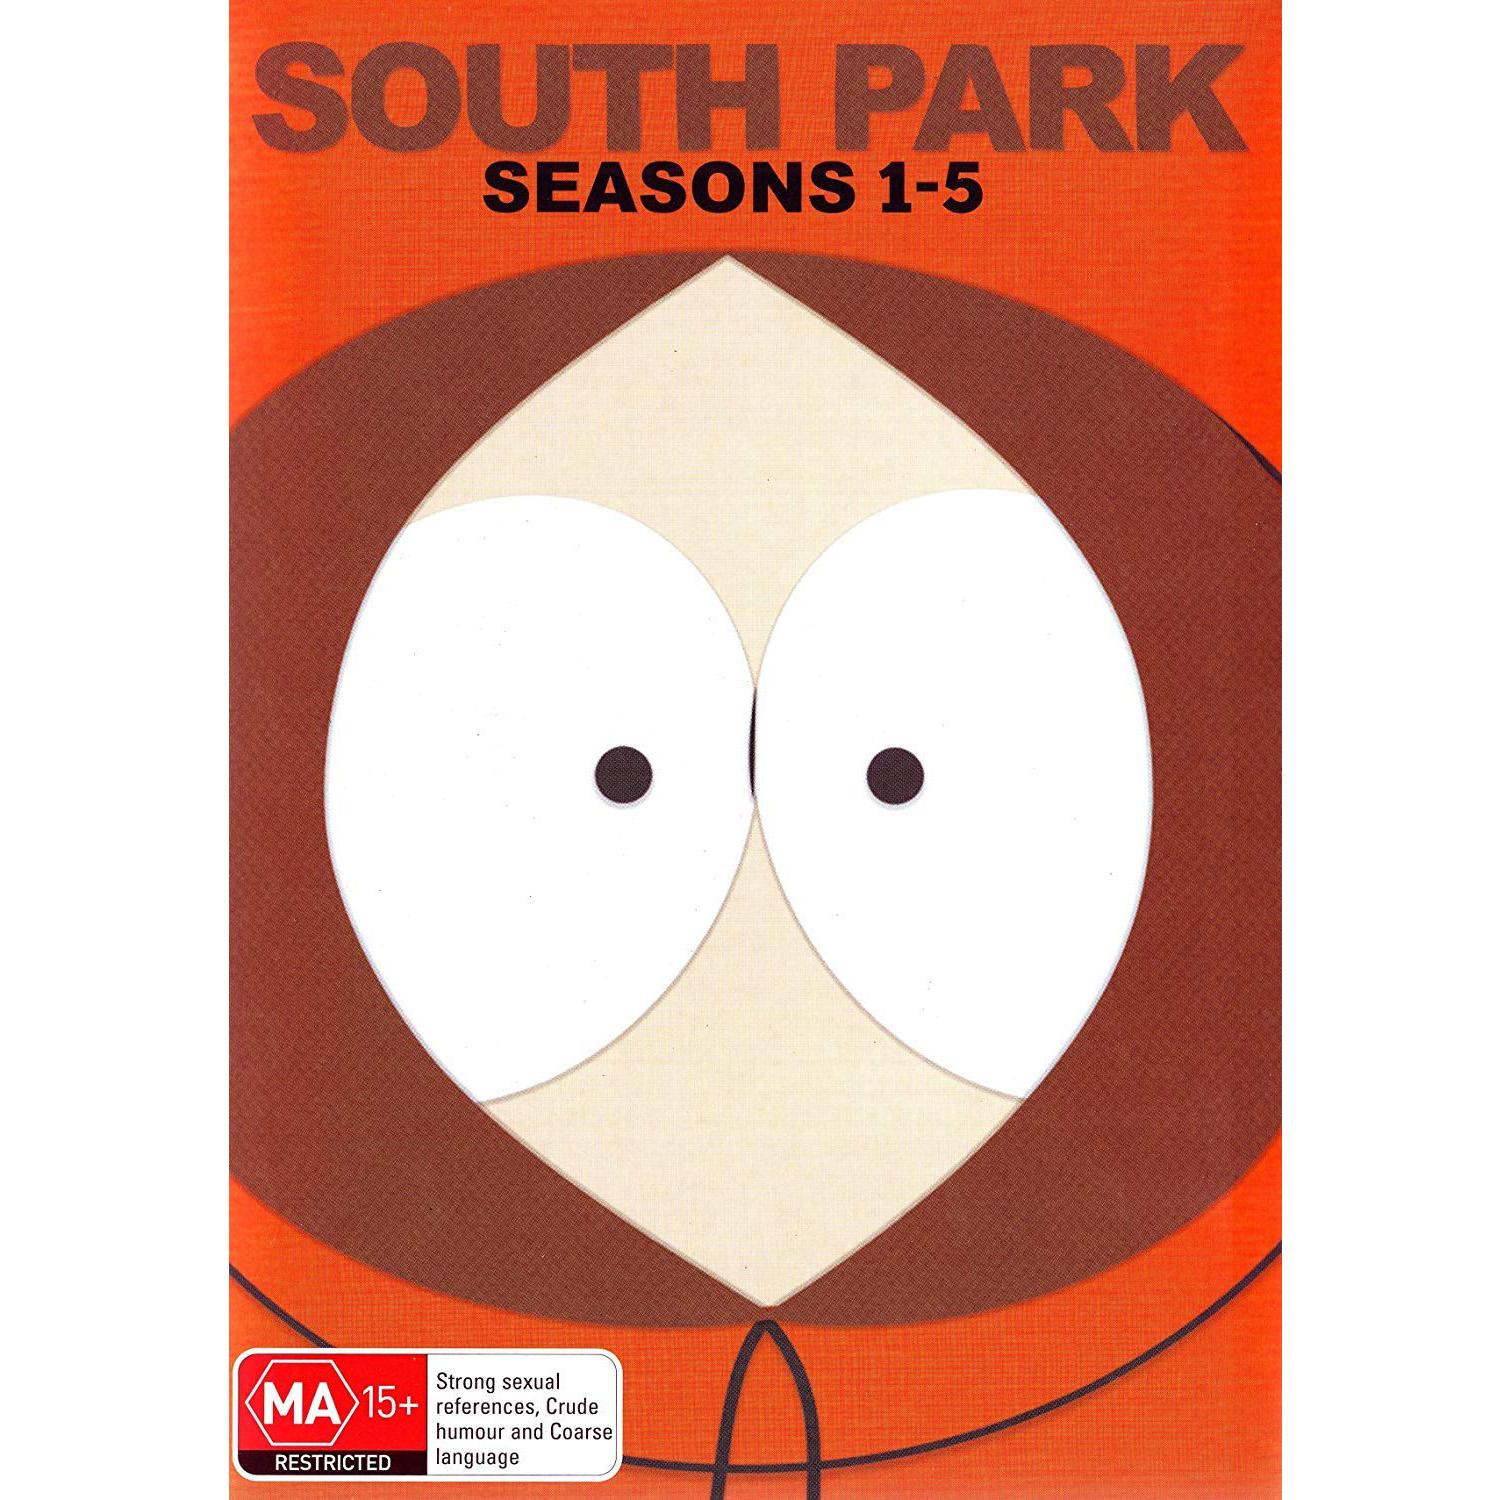 South Park Seasons 1-5 Blu-ray for $26.41